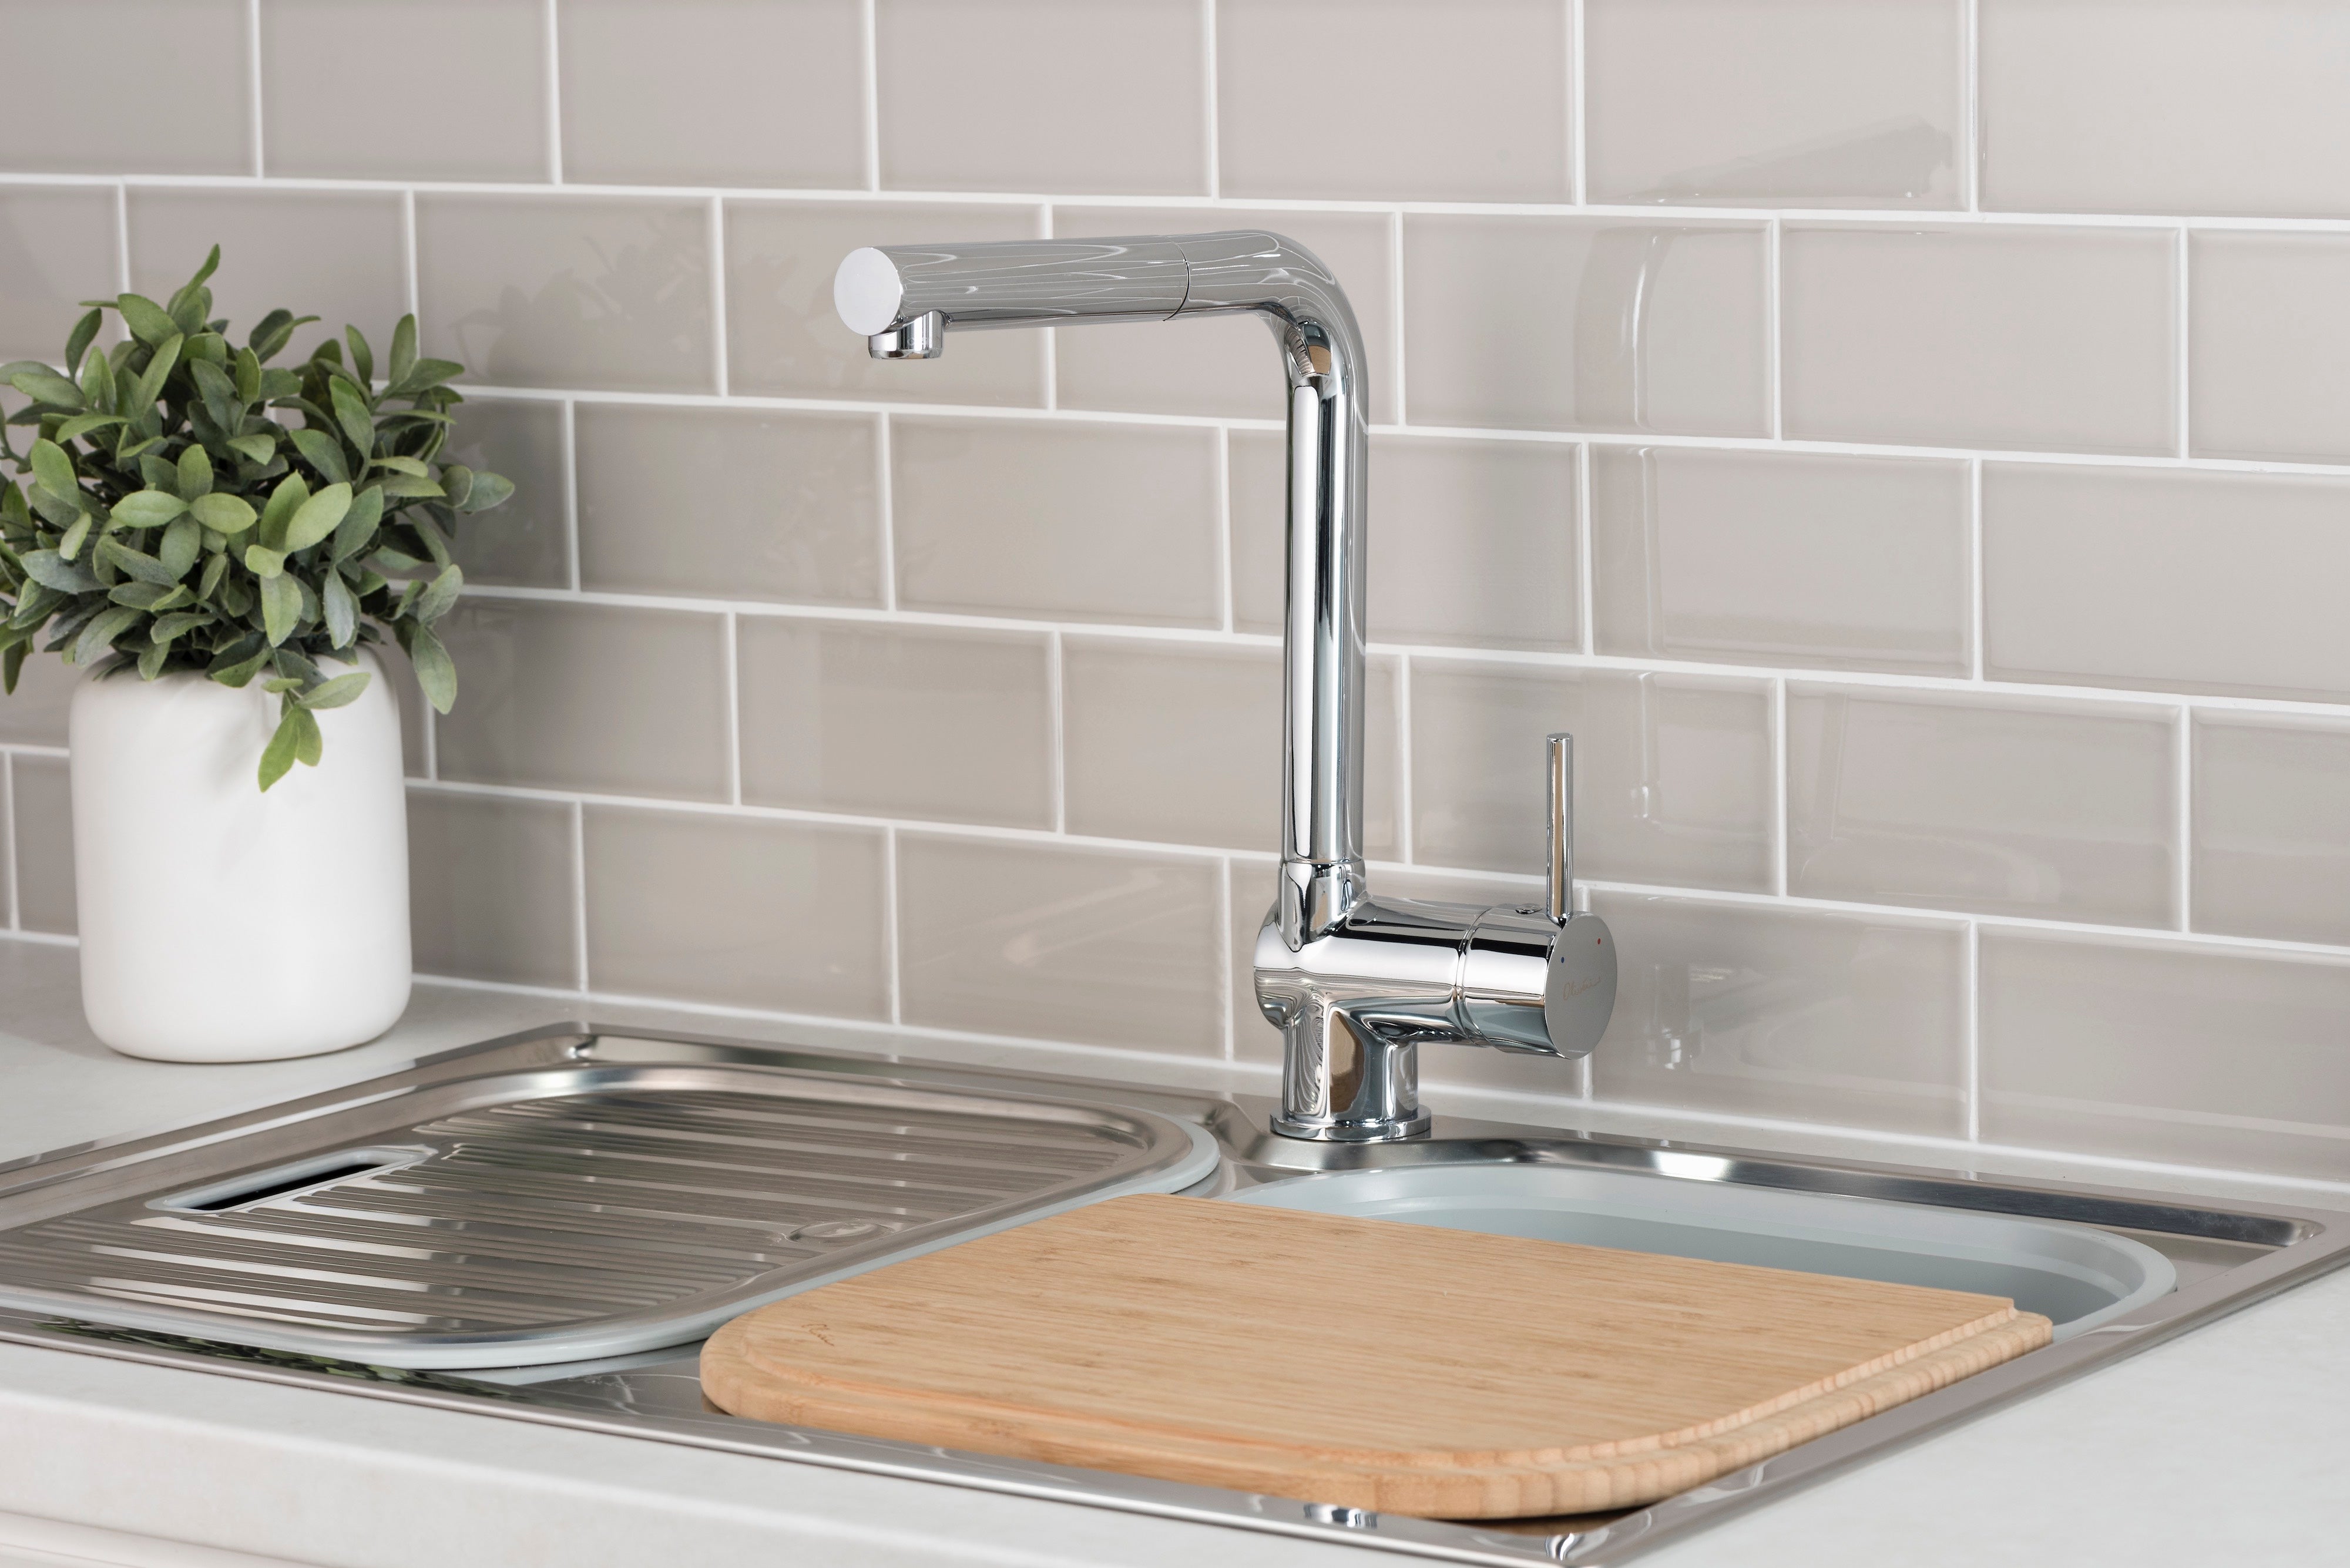 Kitchen Sinks That Wont Drain Your Budget Bathware Direct